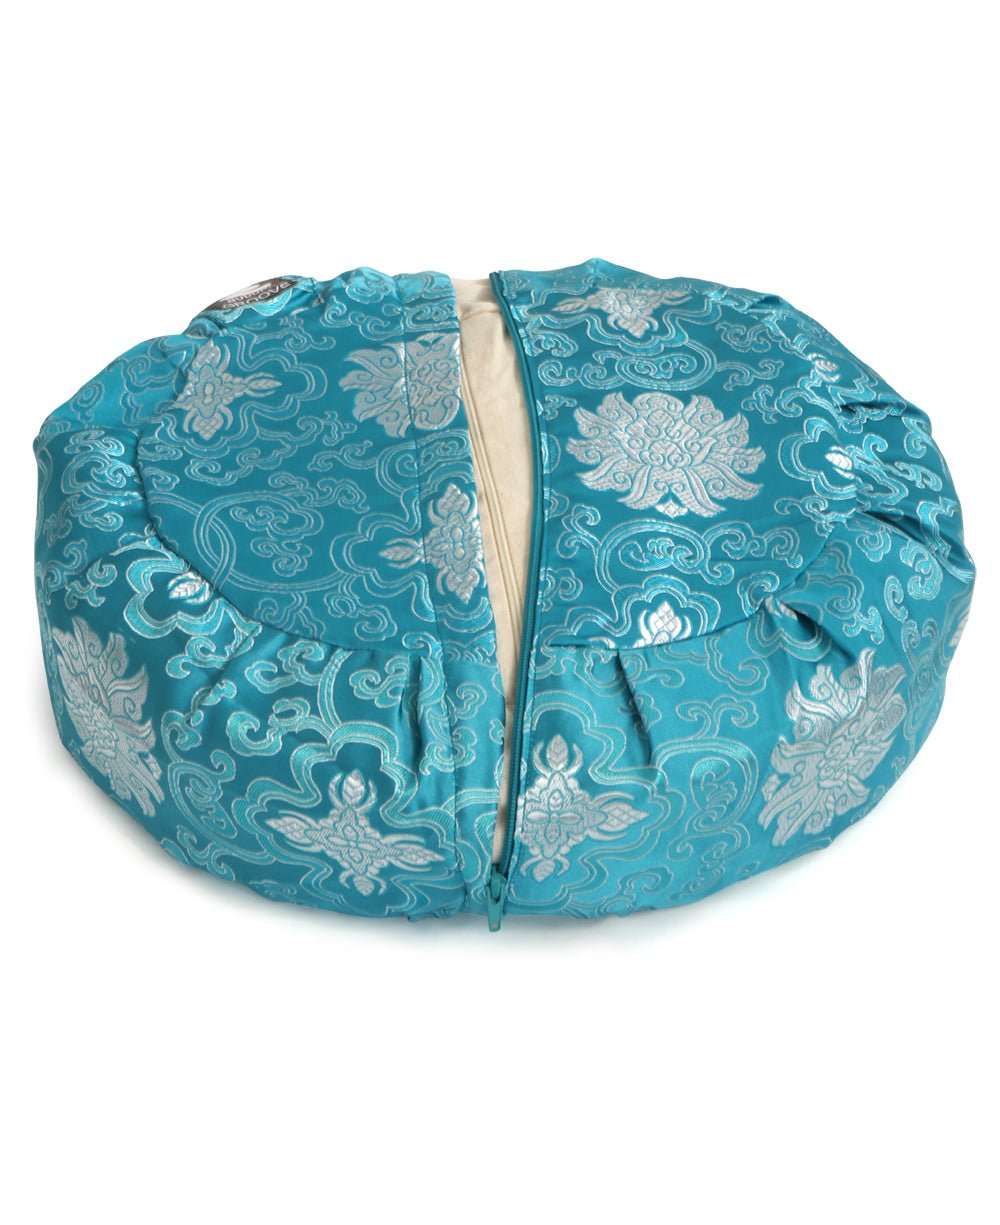 Brocade Zafu Meditation Cushion in Turquoise Blue - Massage Cushions